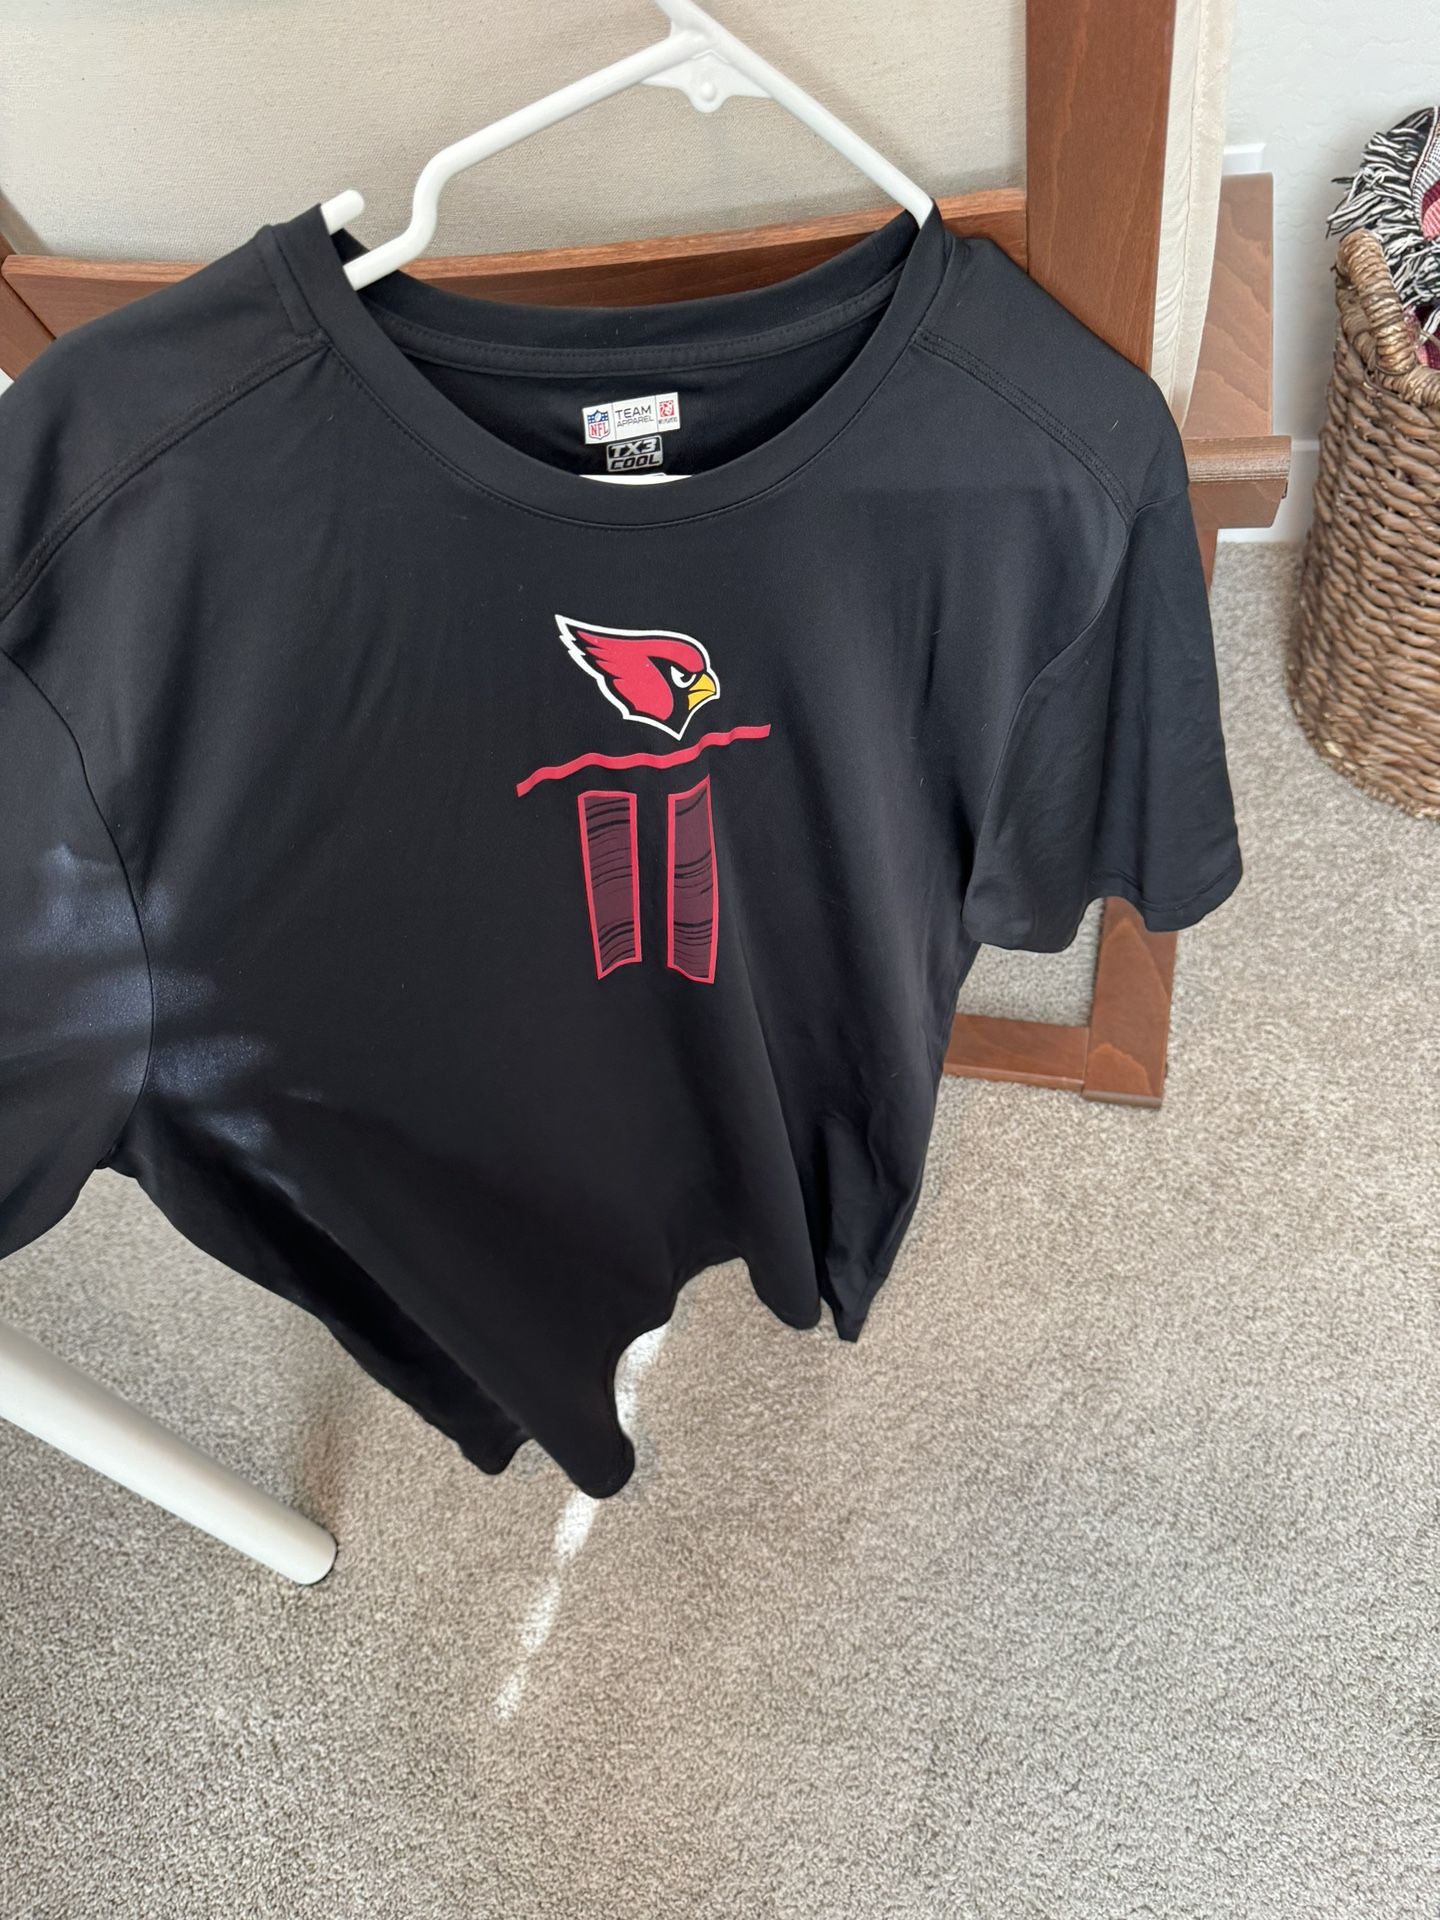 AZ Cardinals Jersey Shirt